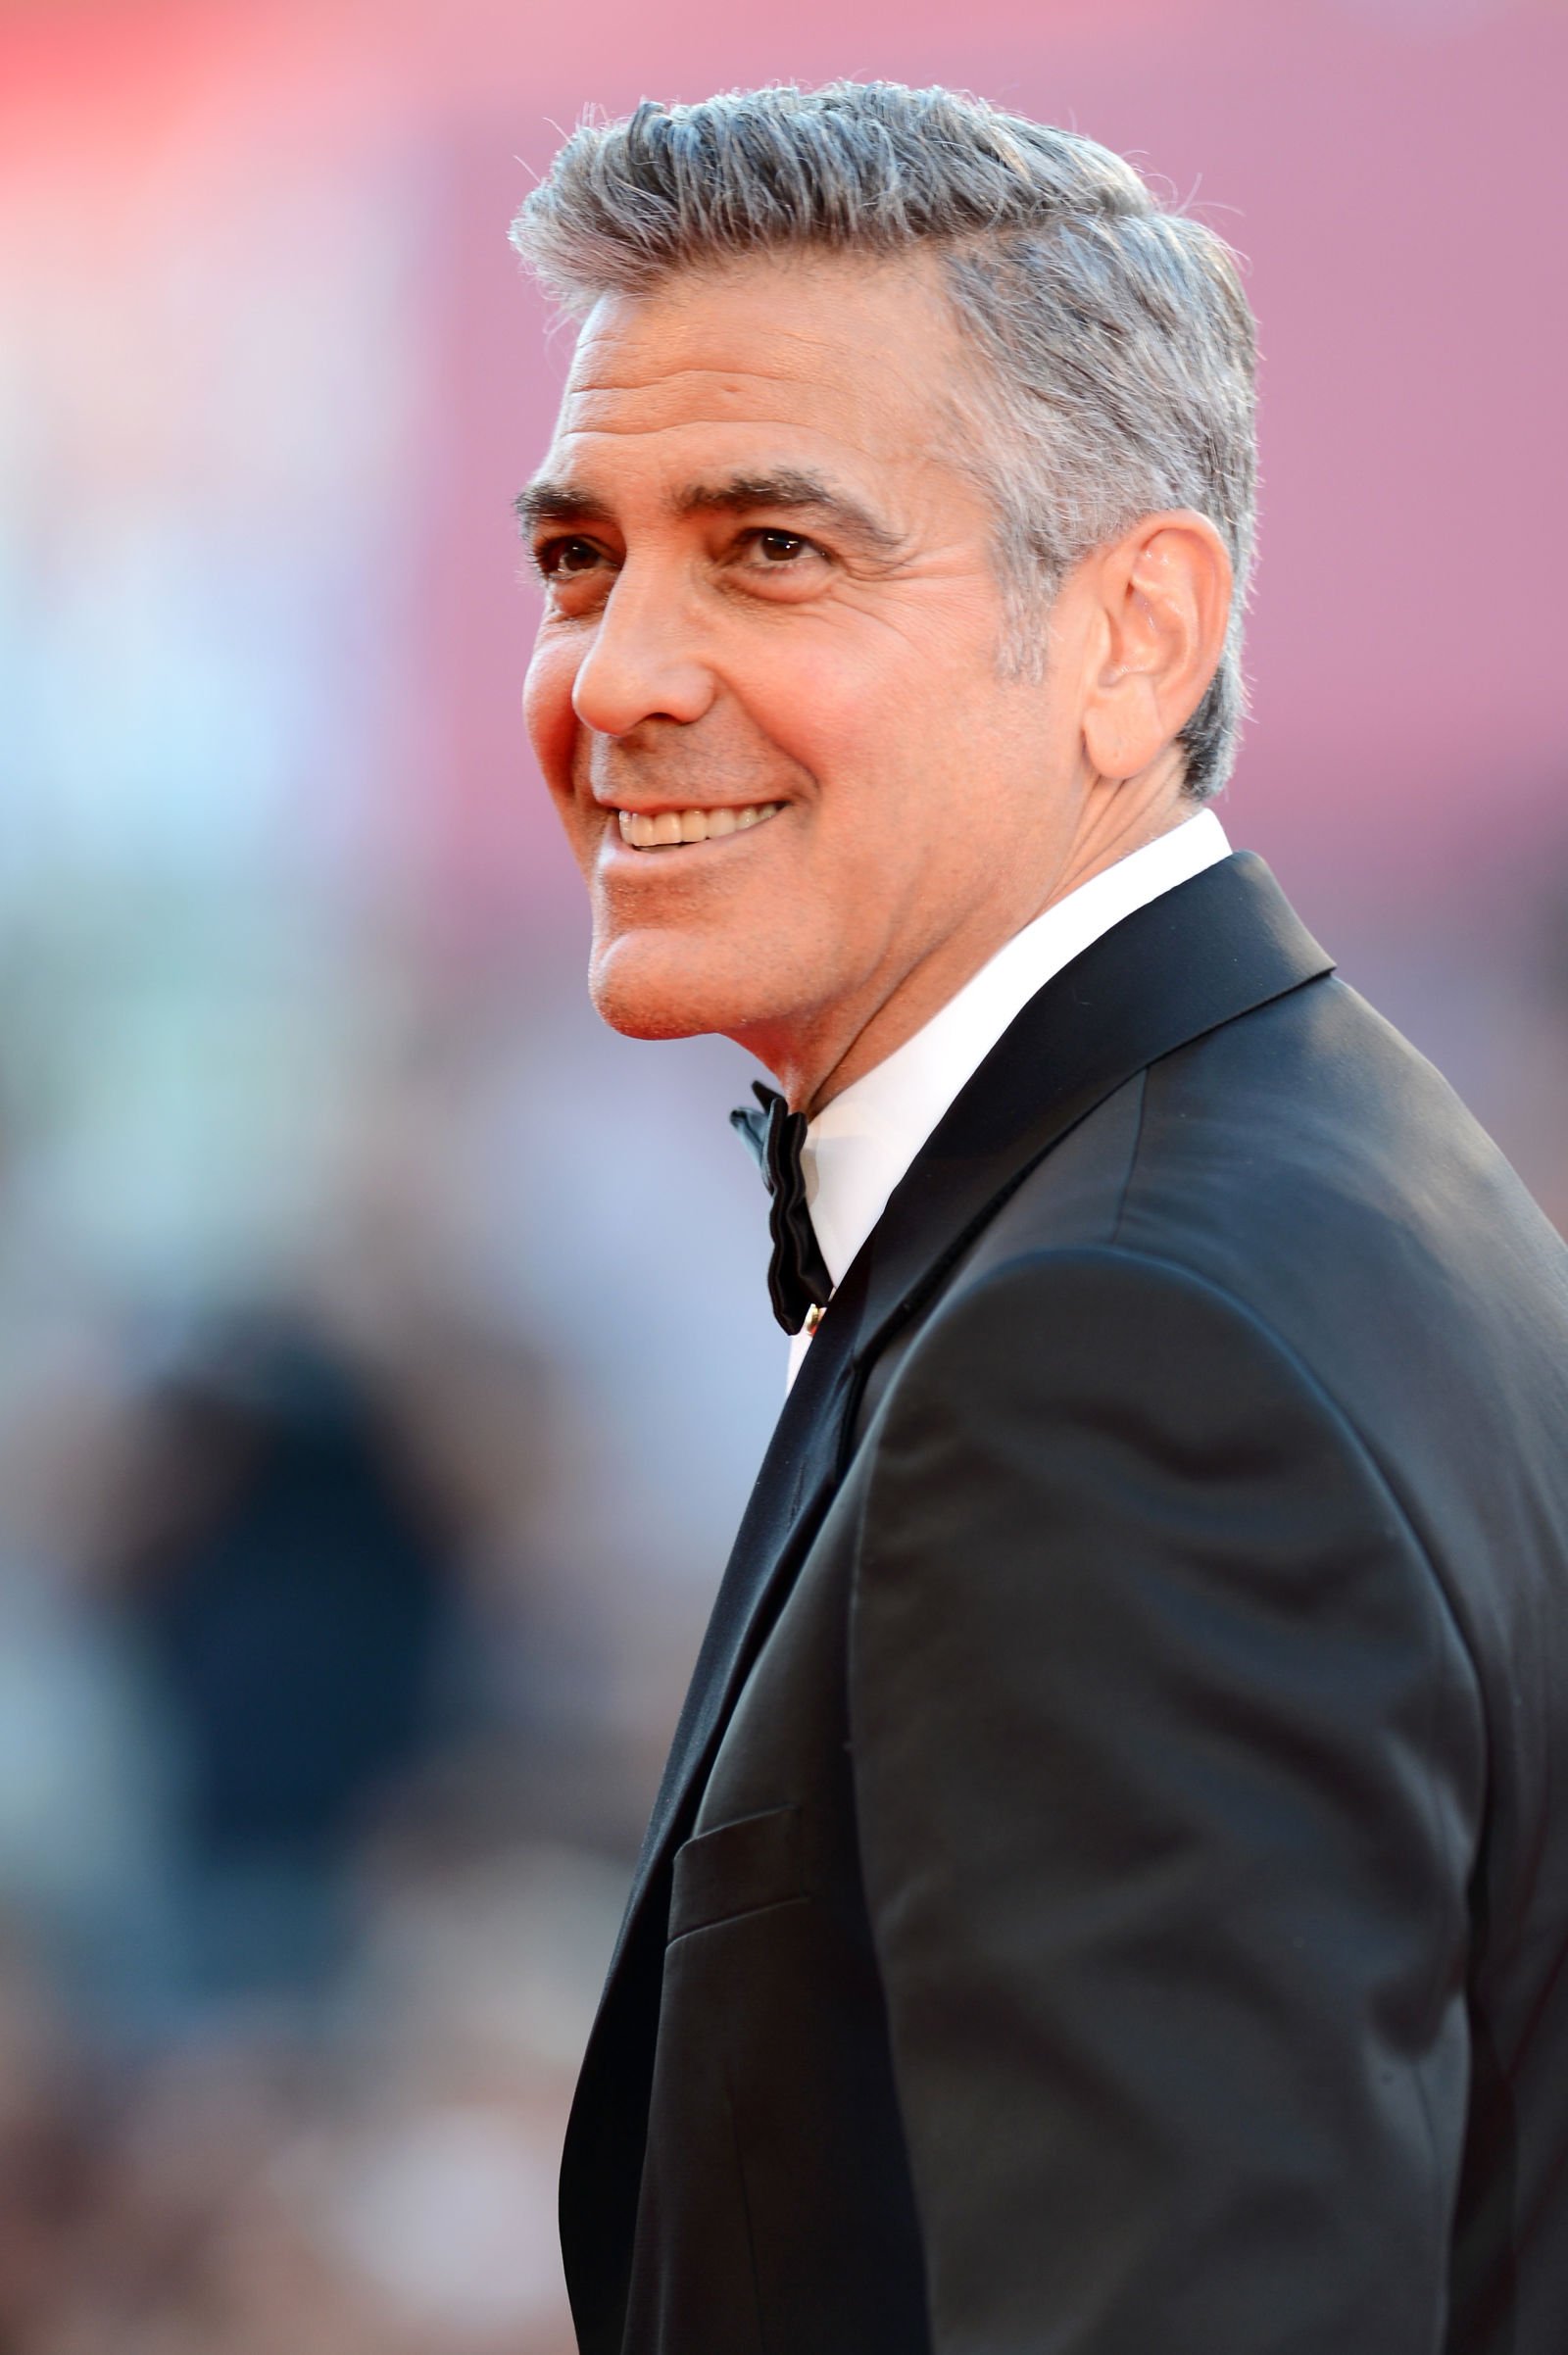 Clooney_grayhairstyle